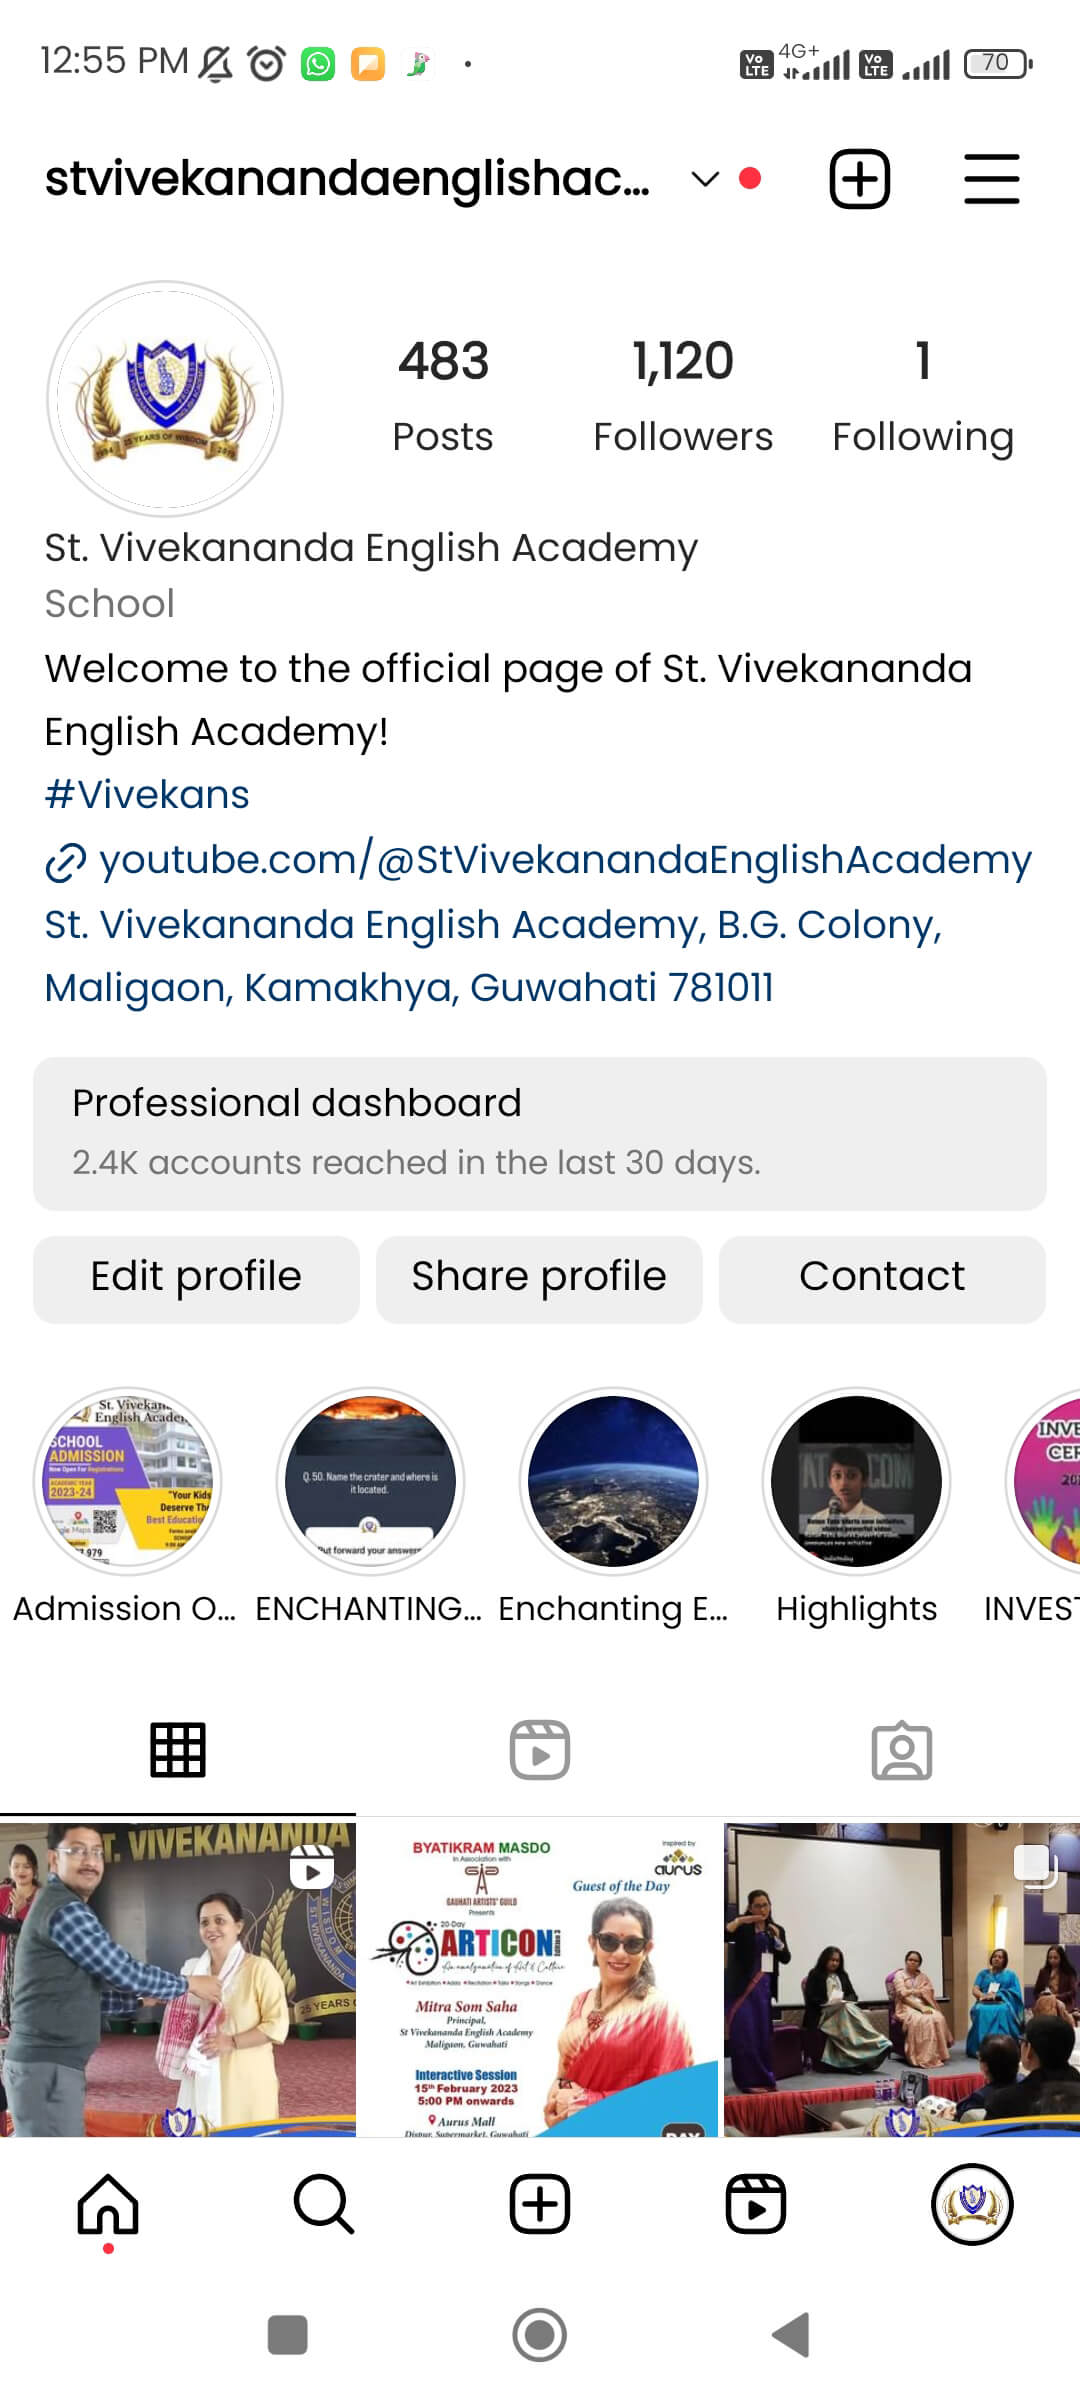 St Vivekananda English Academy